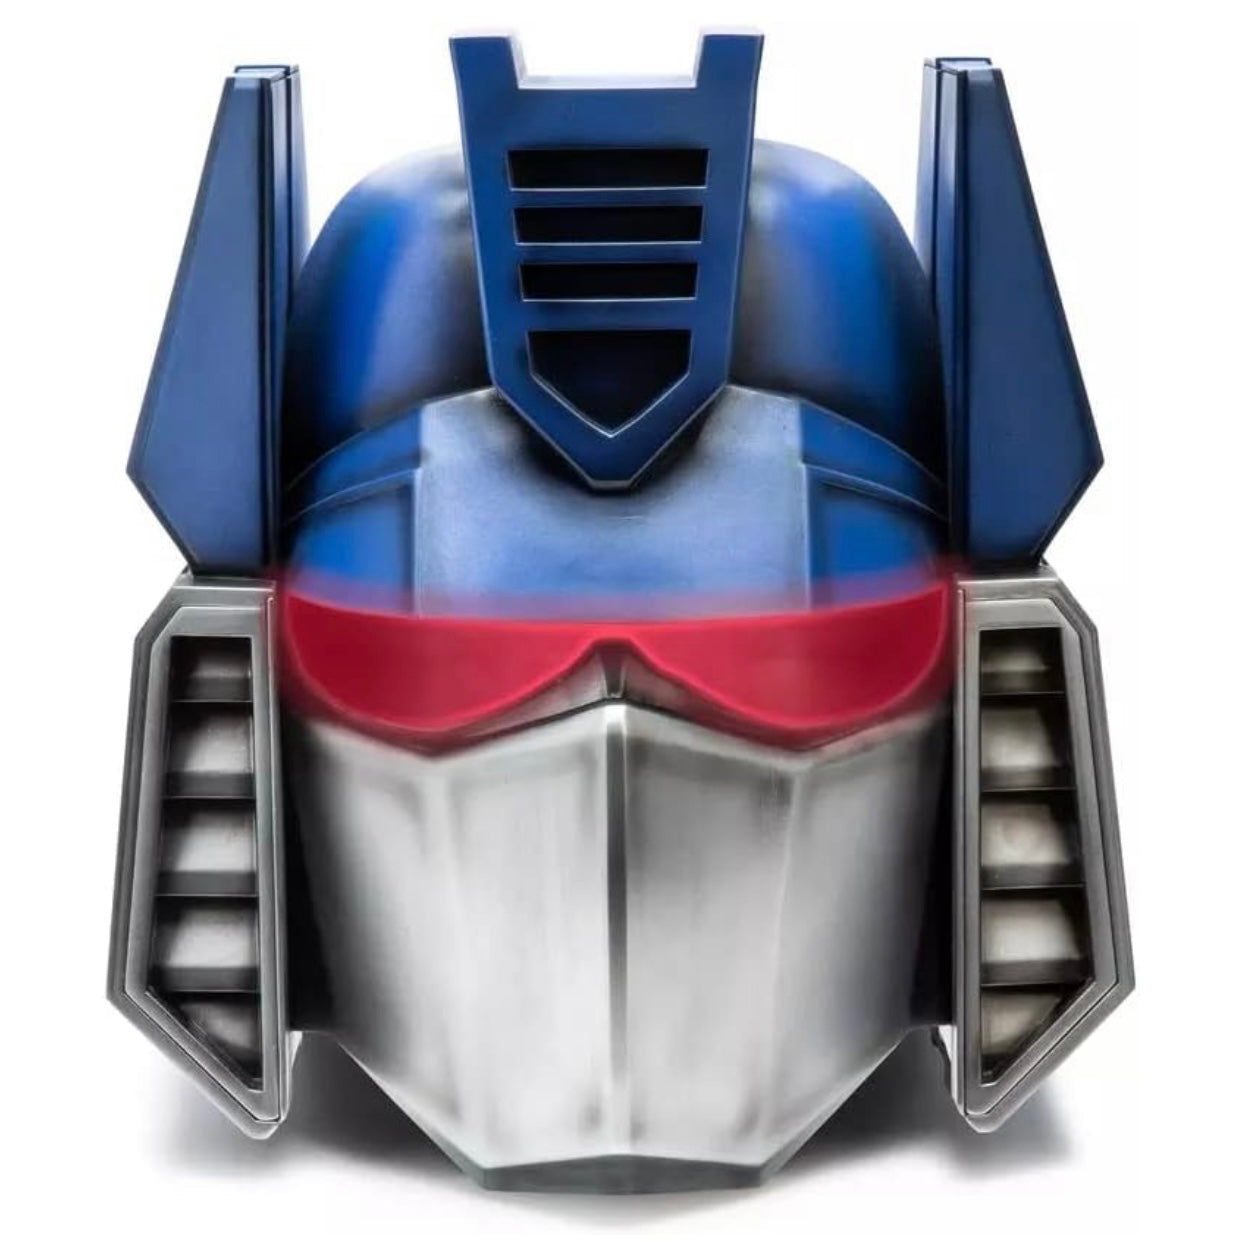 Modern Icons Transformers Soundwave Helmet Replica GameStop Exclusive